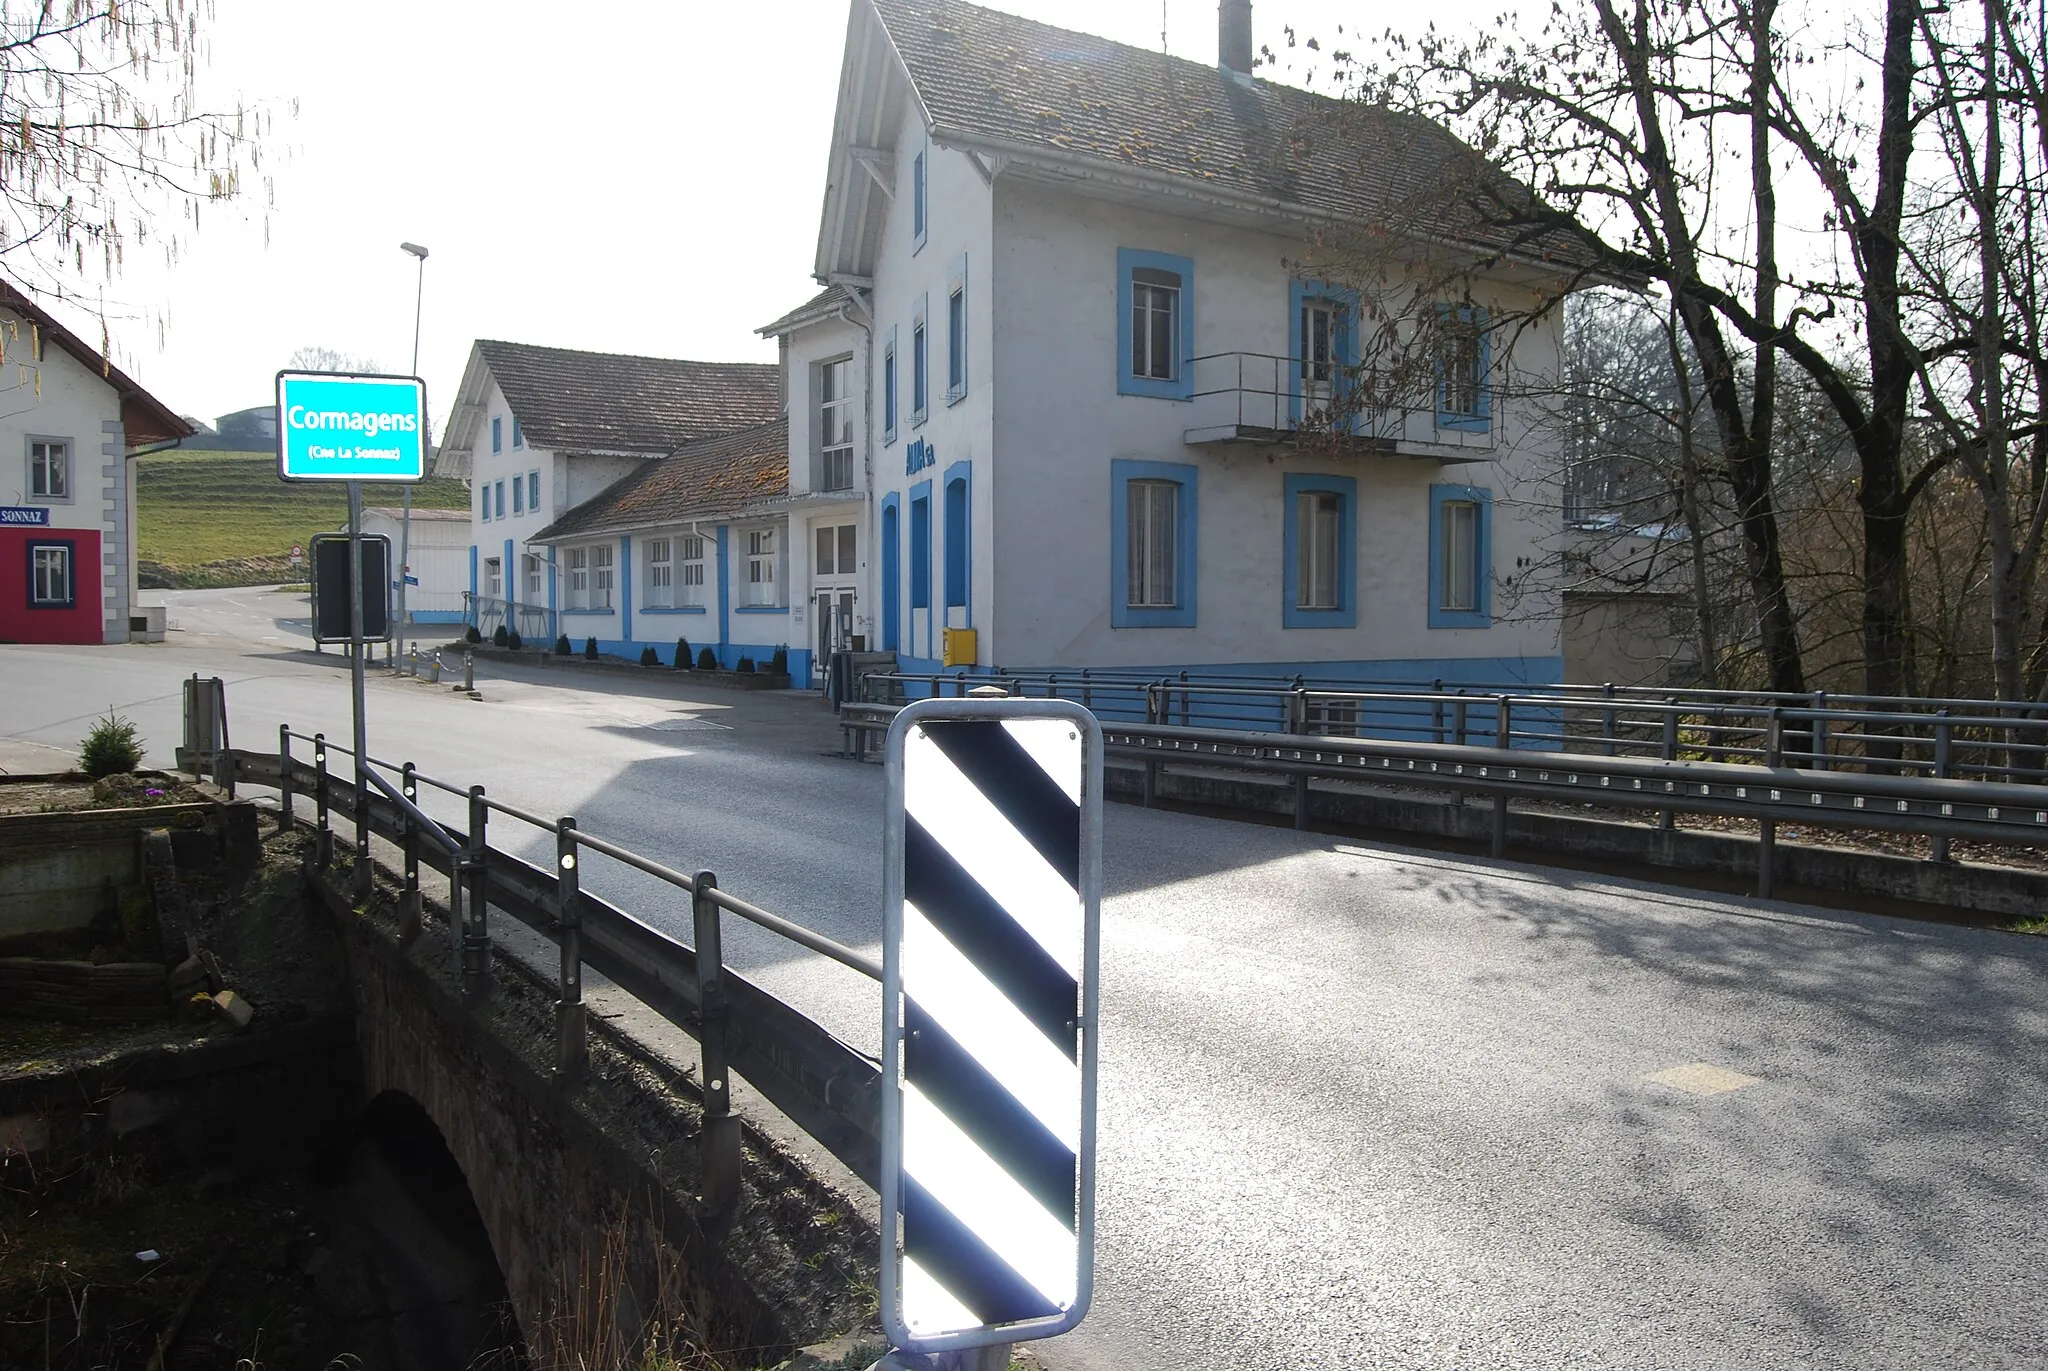 Photo showing: Bridge over Sonnaz at Cormagens, municipality La Sonnaz, canton of Fribourg, Switzerland